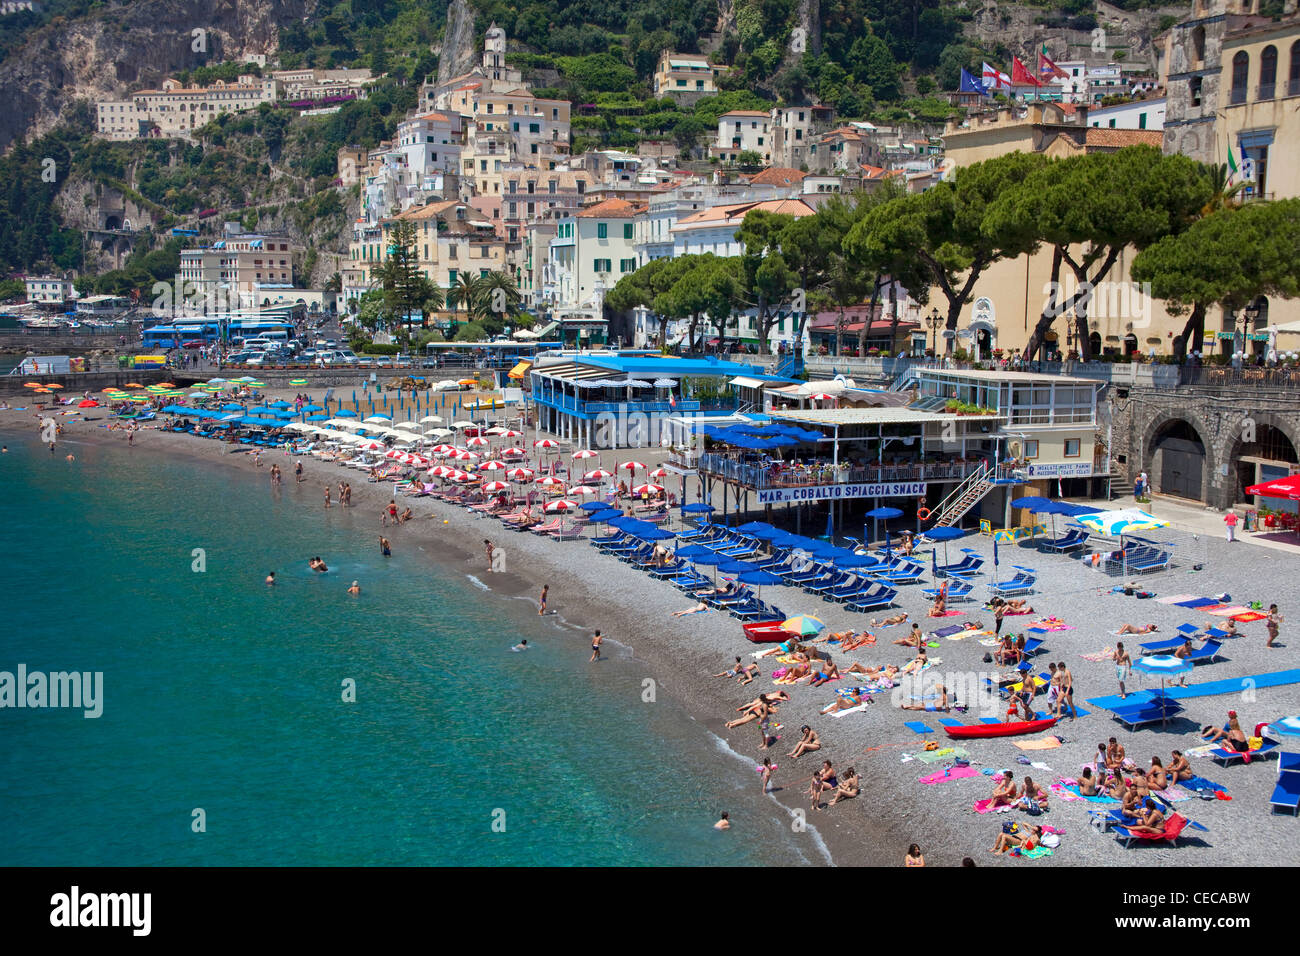 Strand des Dorfes Amalfi, Amalfiküste, UNESCO-Weltkulturerbe, Kampanien, Italien, Mittelmeer, Europa Stockfoto